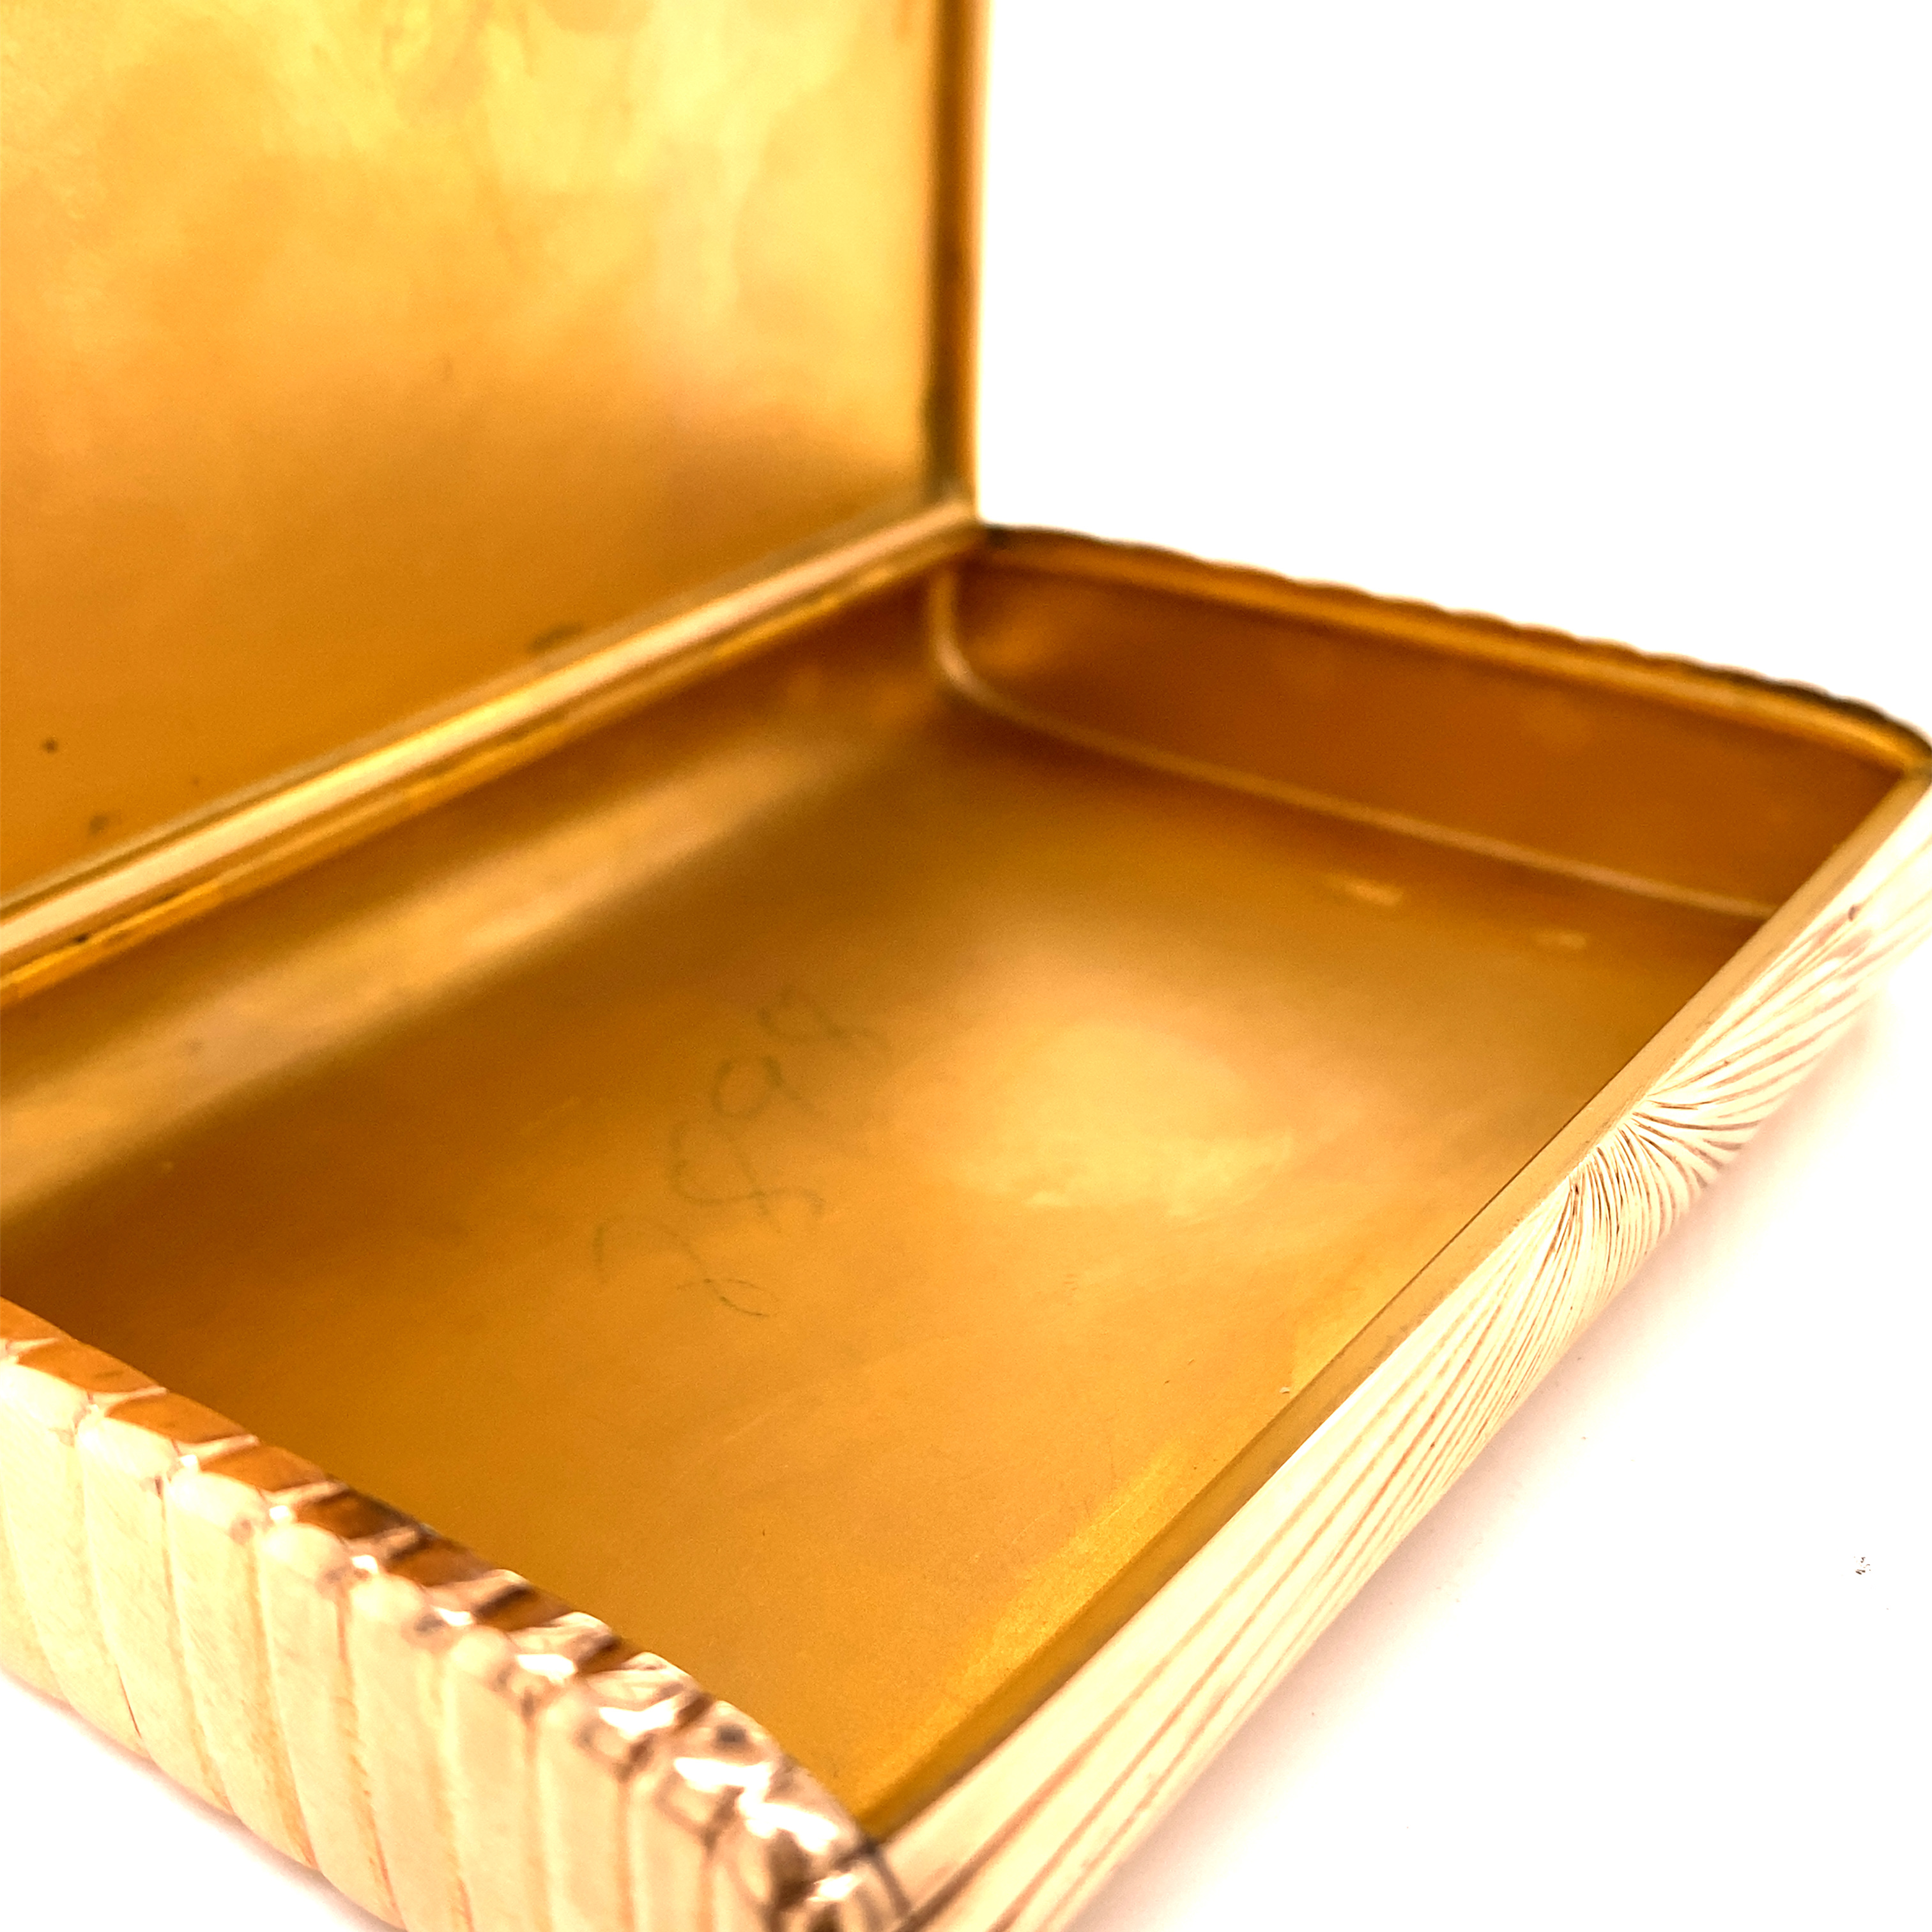 Gold Faberge Cigarette Case - Image 4 of 7